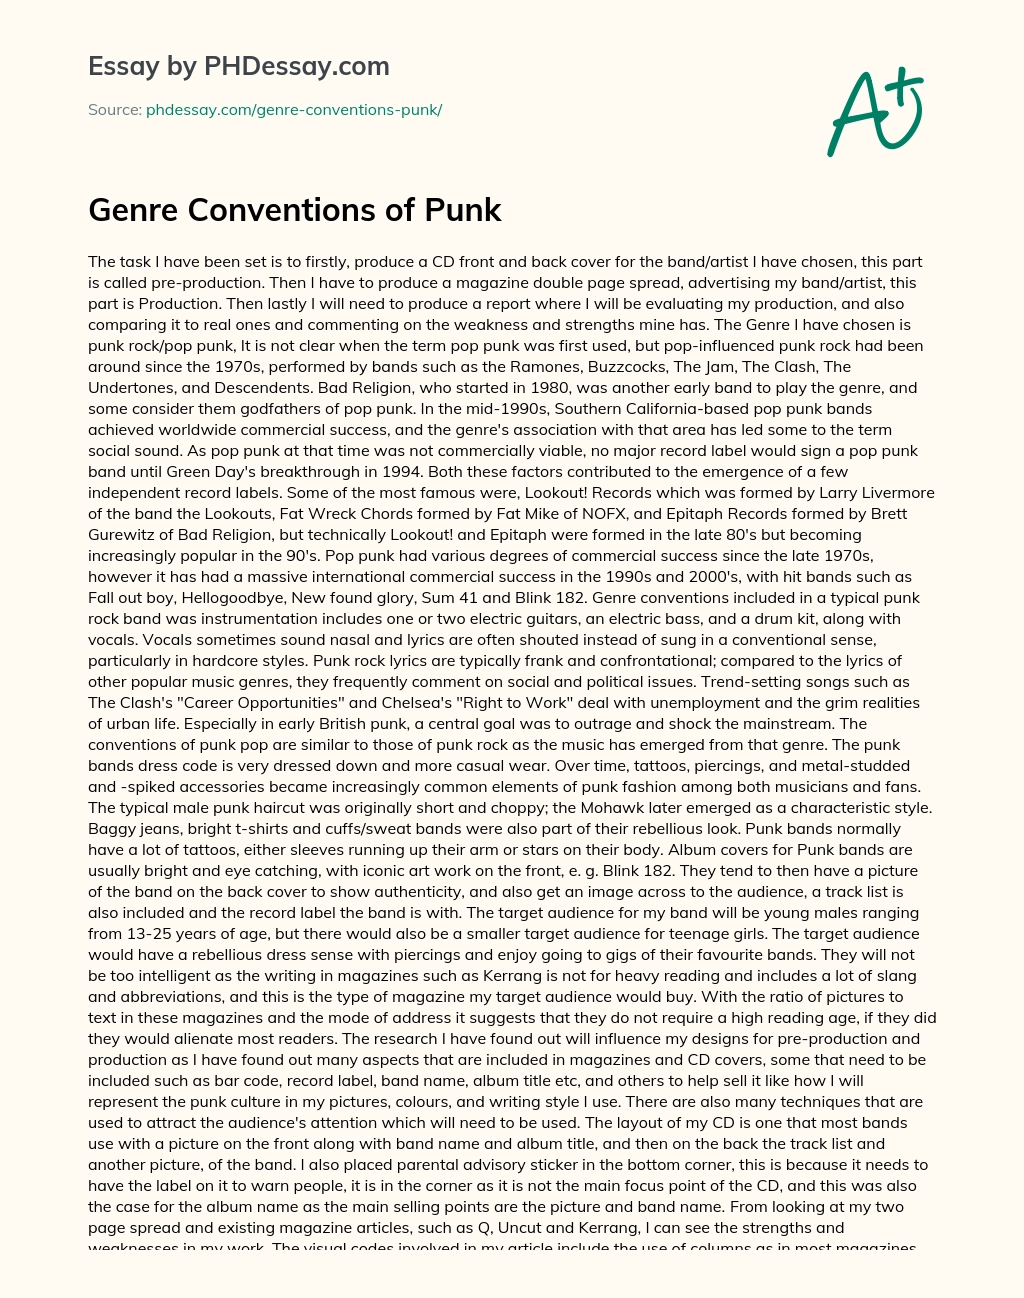 Genre Conventions of Punk essay